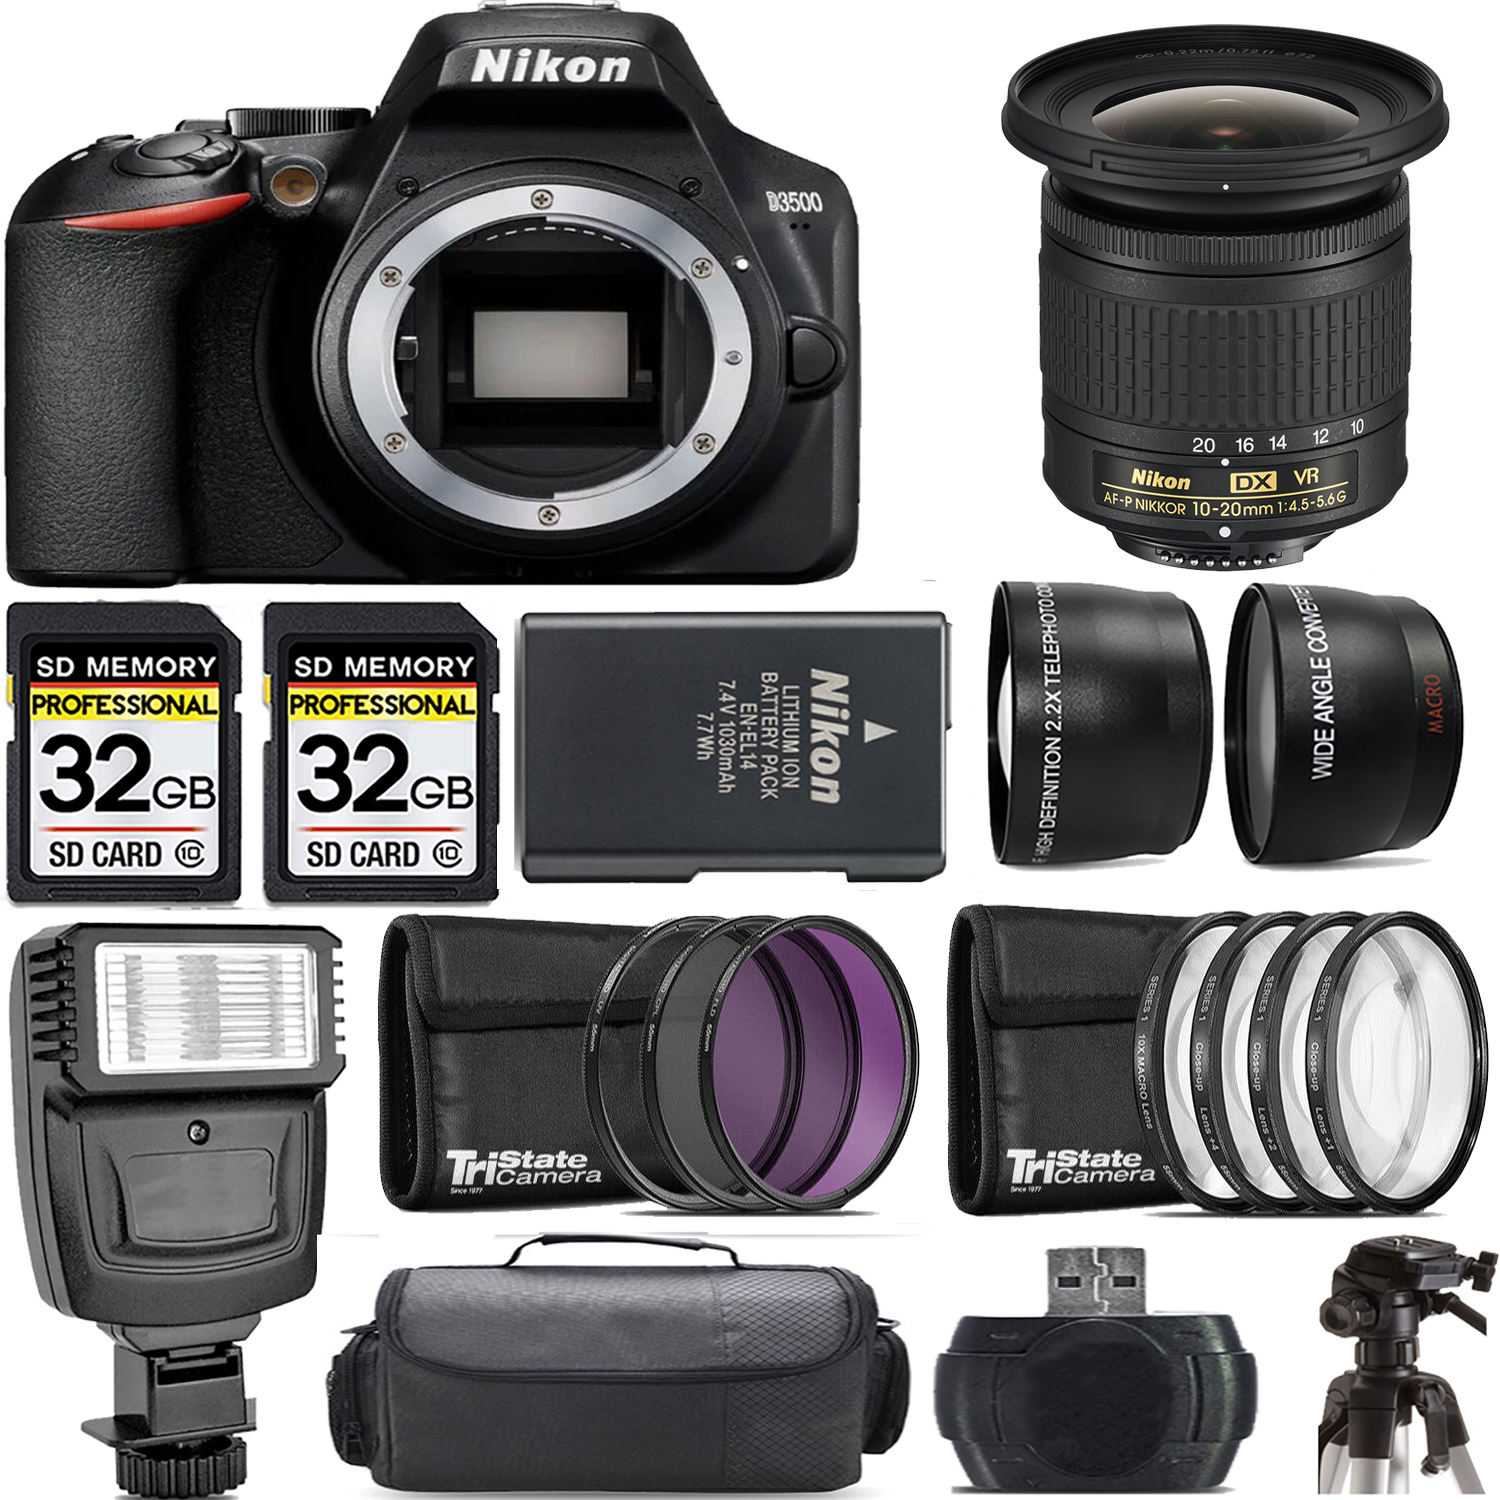 D3500 DSLR Camera (Body Only) + 10-20mm f/4.5-5.6G Lens + Flash - Kit *FREE SHIPPING*